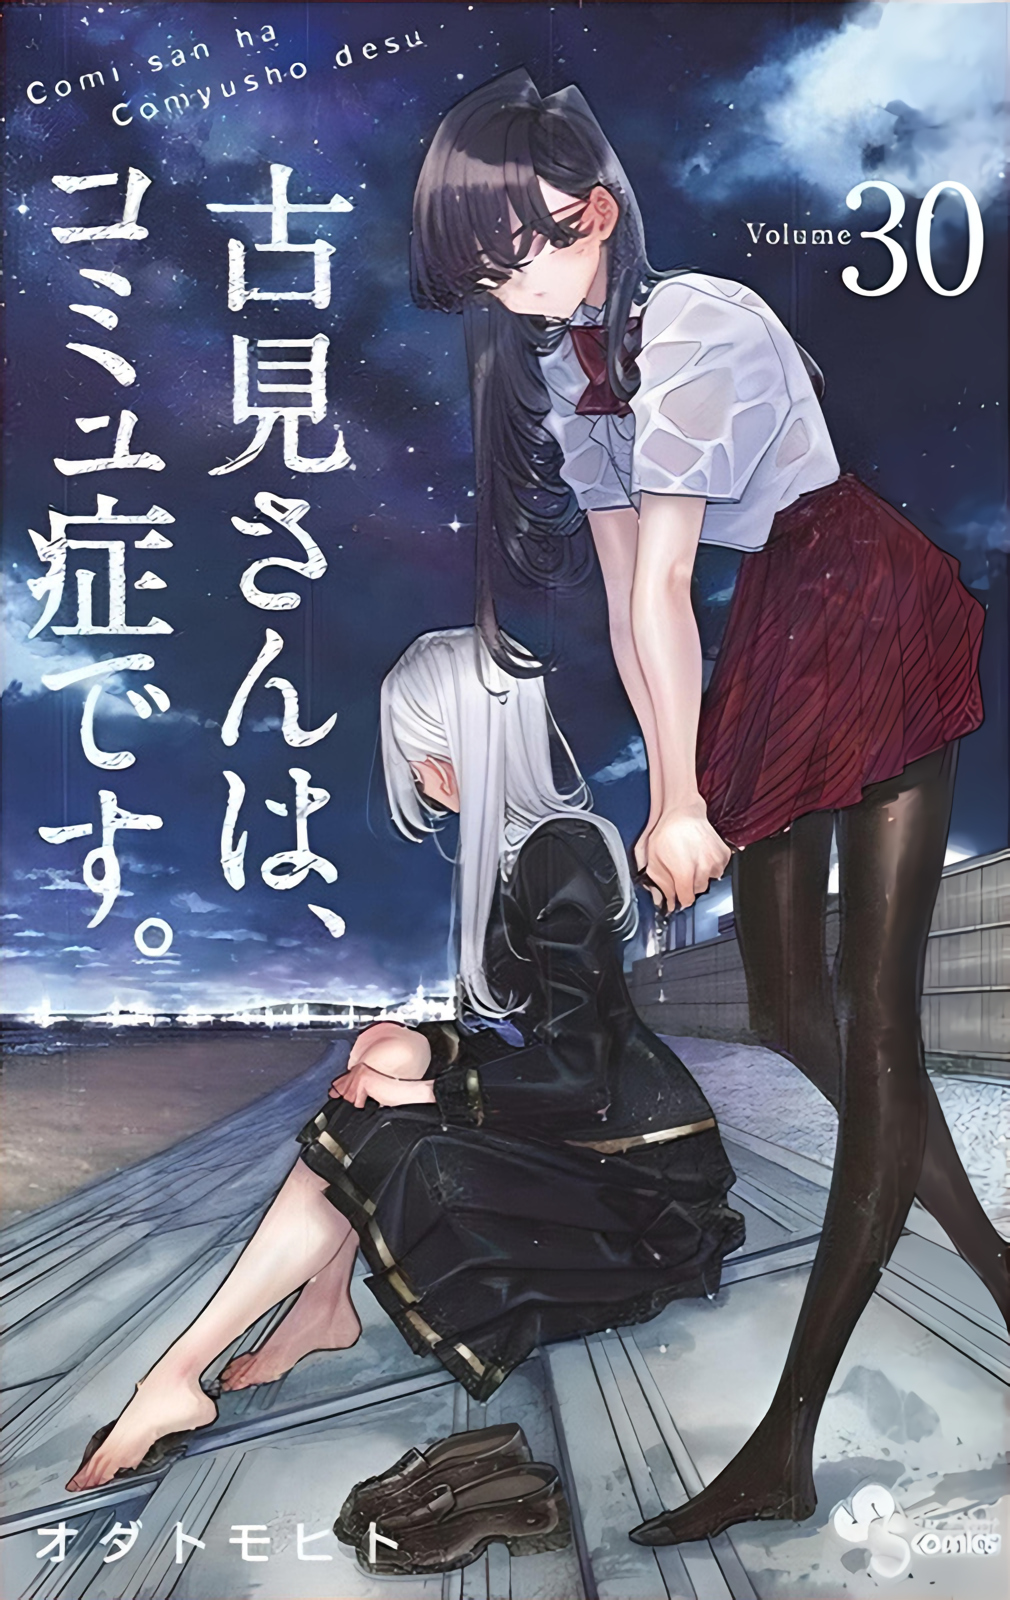 Komi Can't Communicate Manga Volume 27